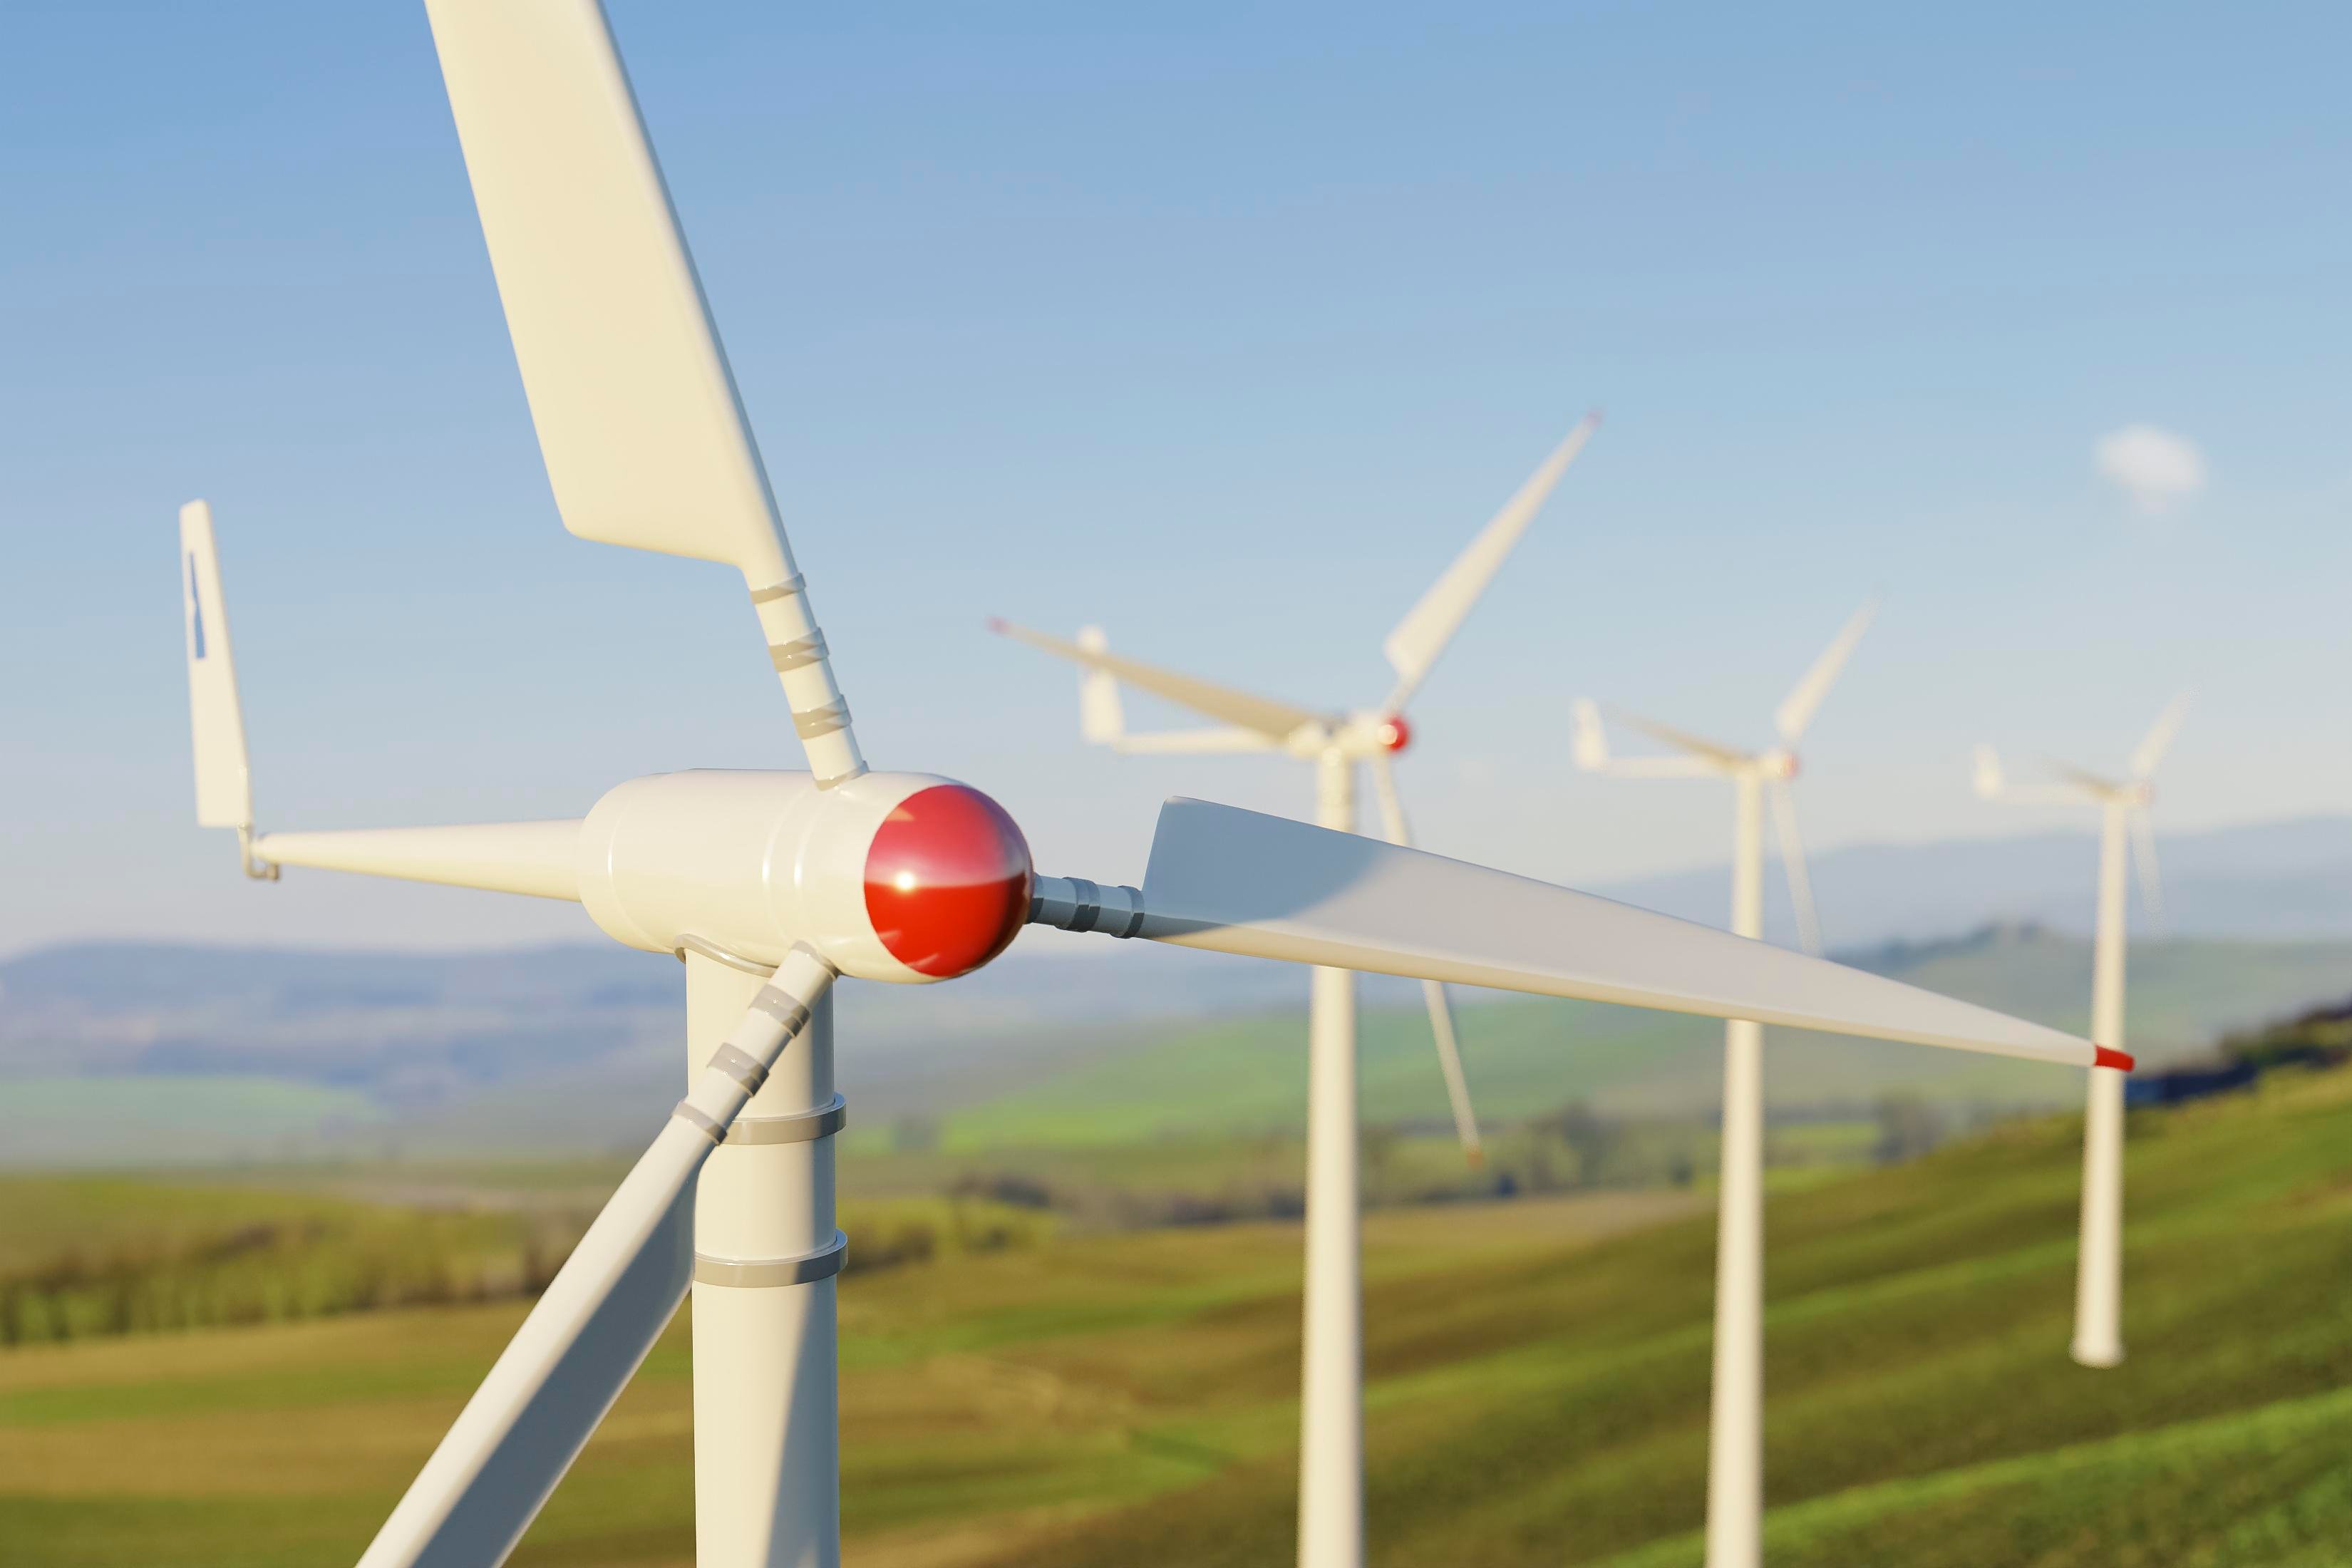 Wind turbines need virtual inertia